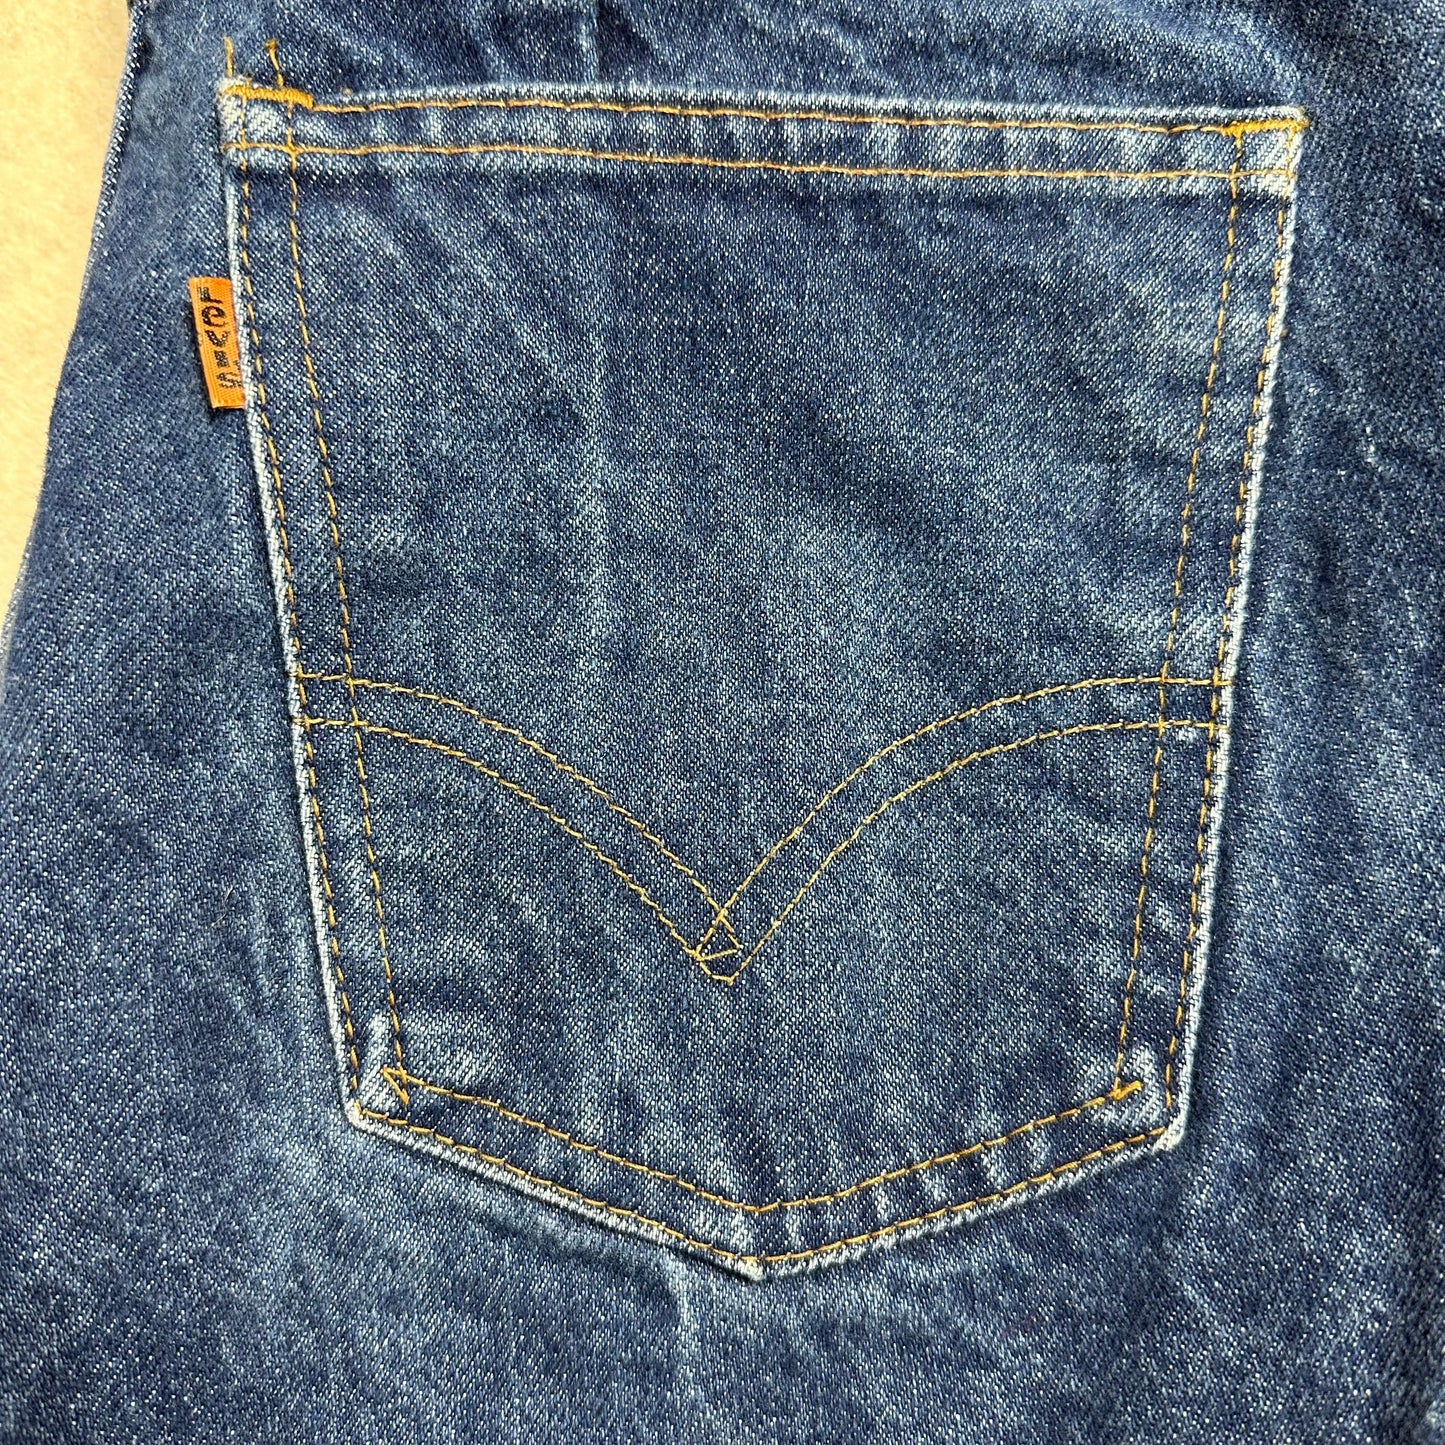 1970s Women’s Levi’s Blue Jeans, Size 8, 28"x27.5", High Rise, Straight Leg